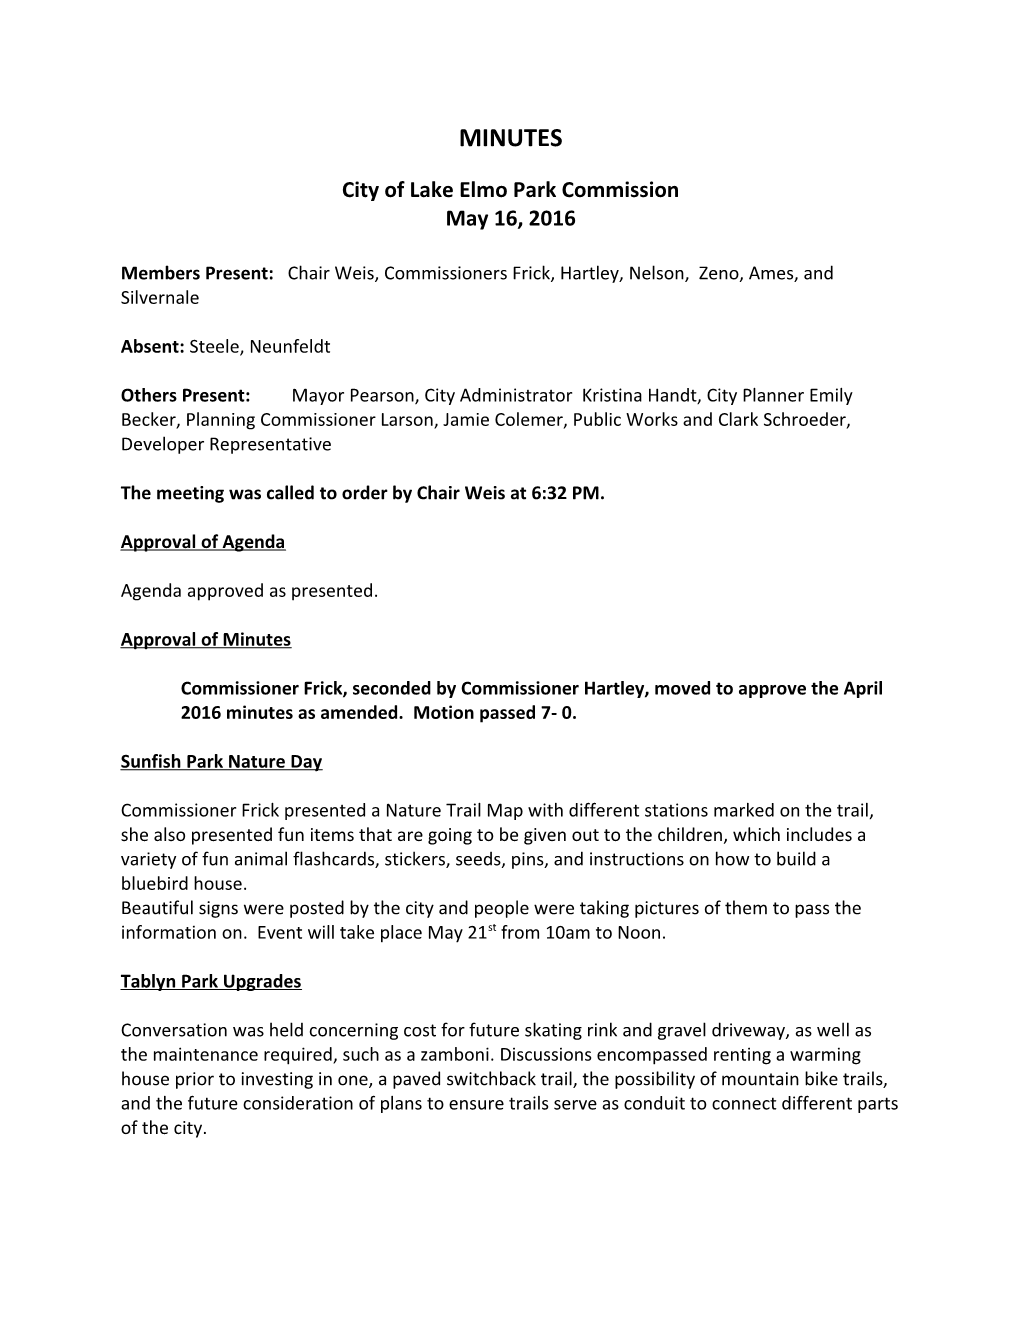 City of Lake Elmo Park Commission